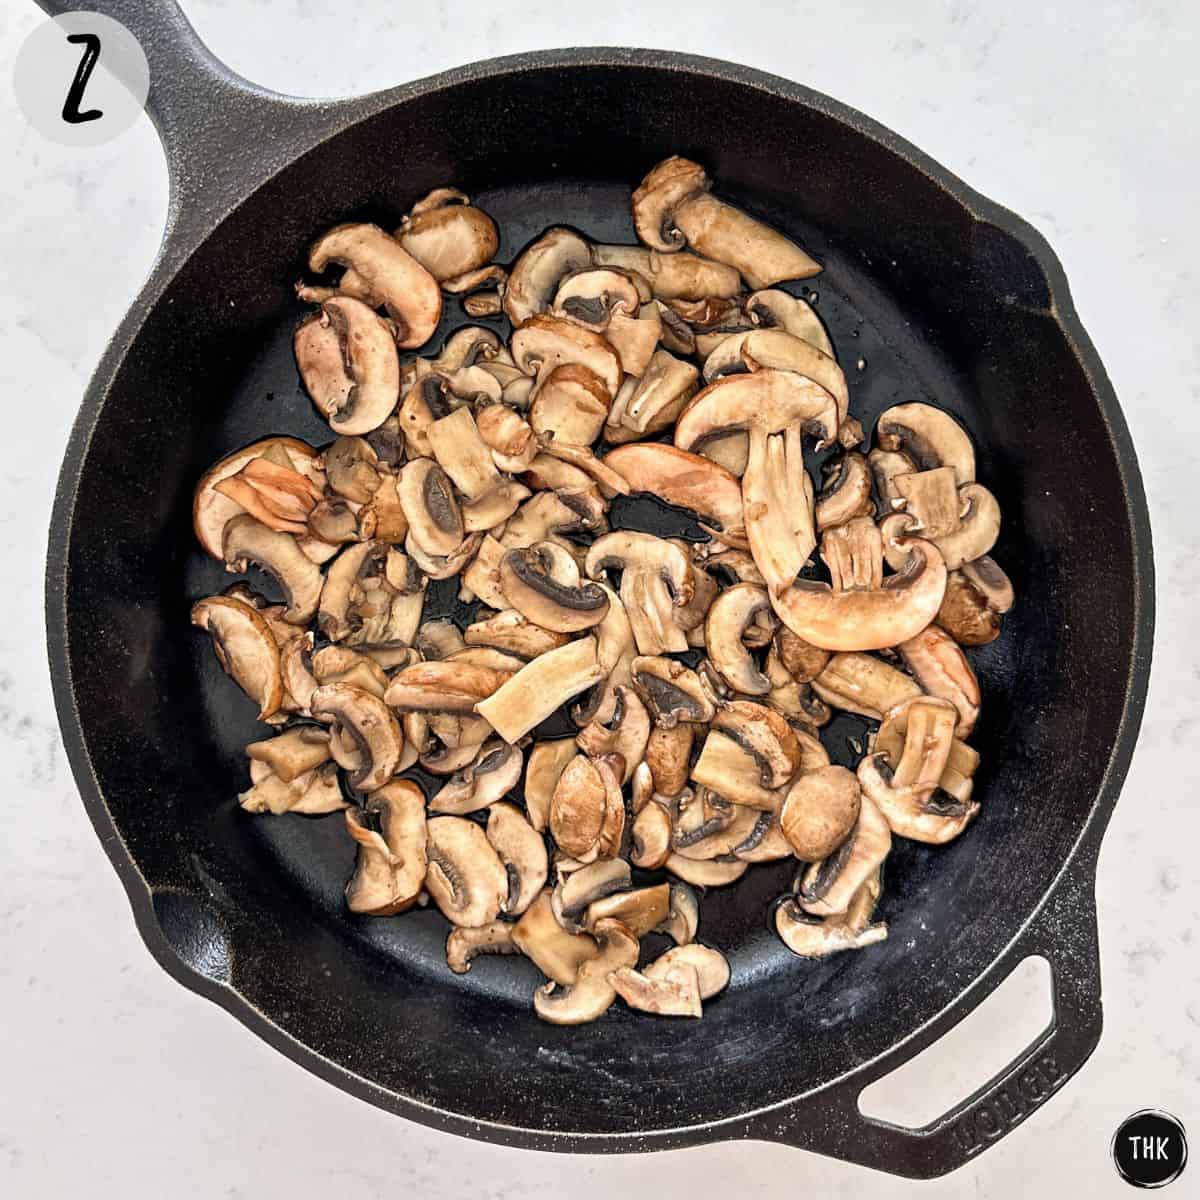 Sautéed mushrooms in cast iron pan.